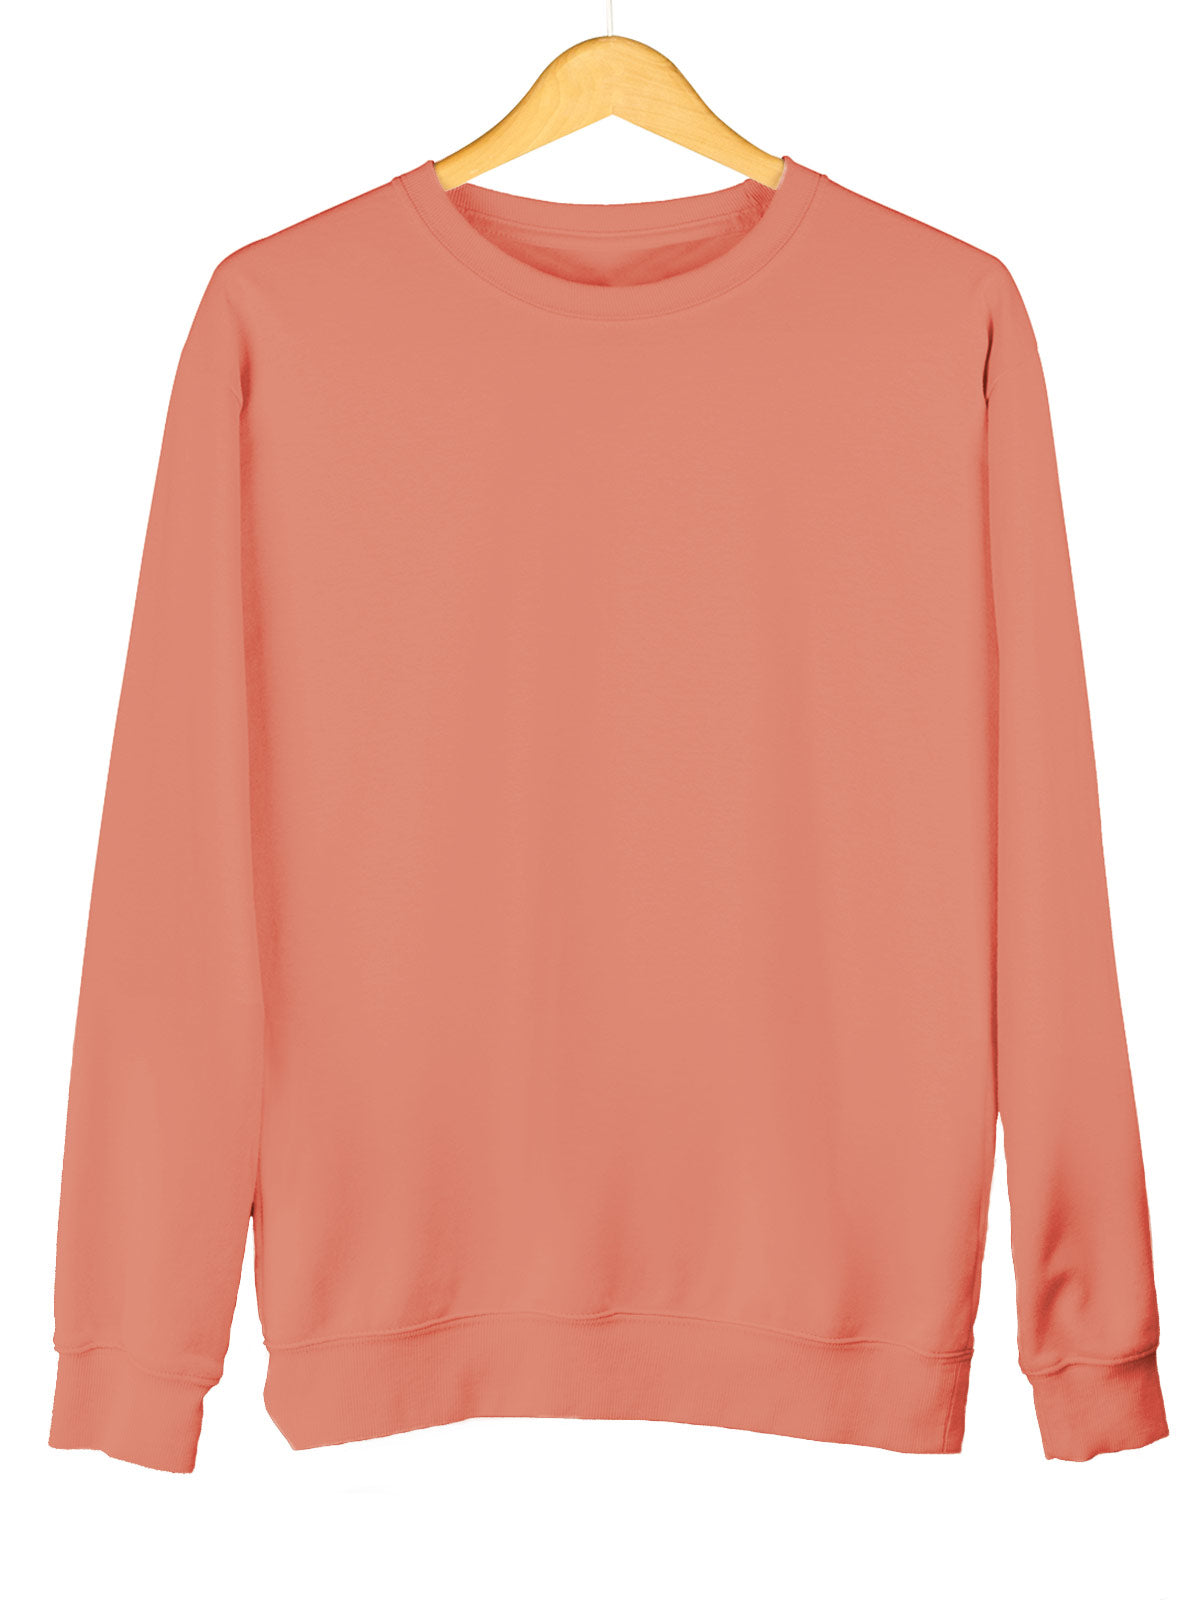 Wine & Coral Peach Unisex Plain Sweatshirt Combo